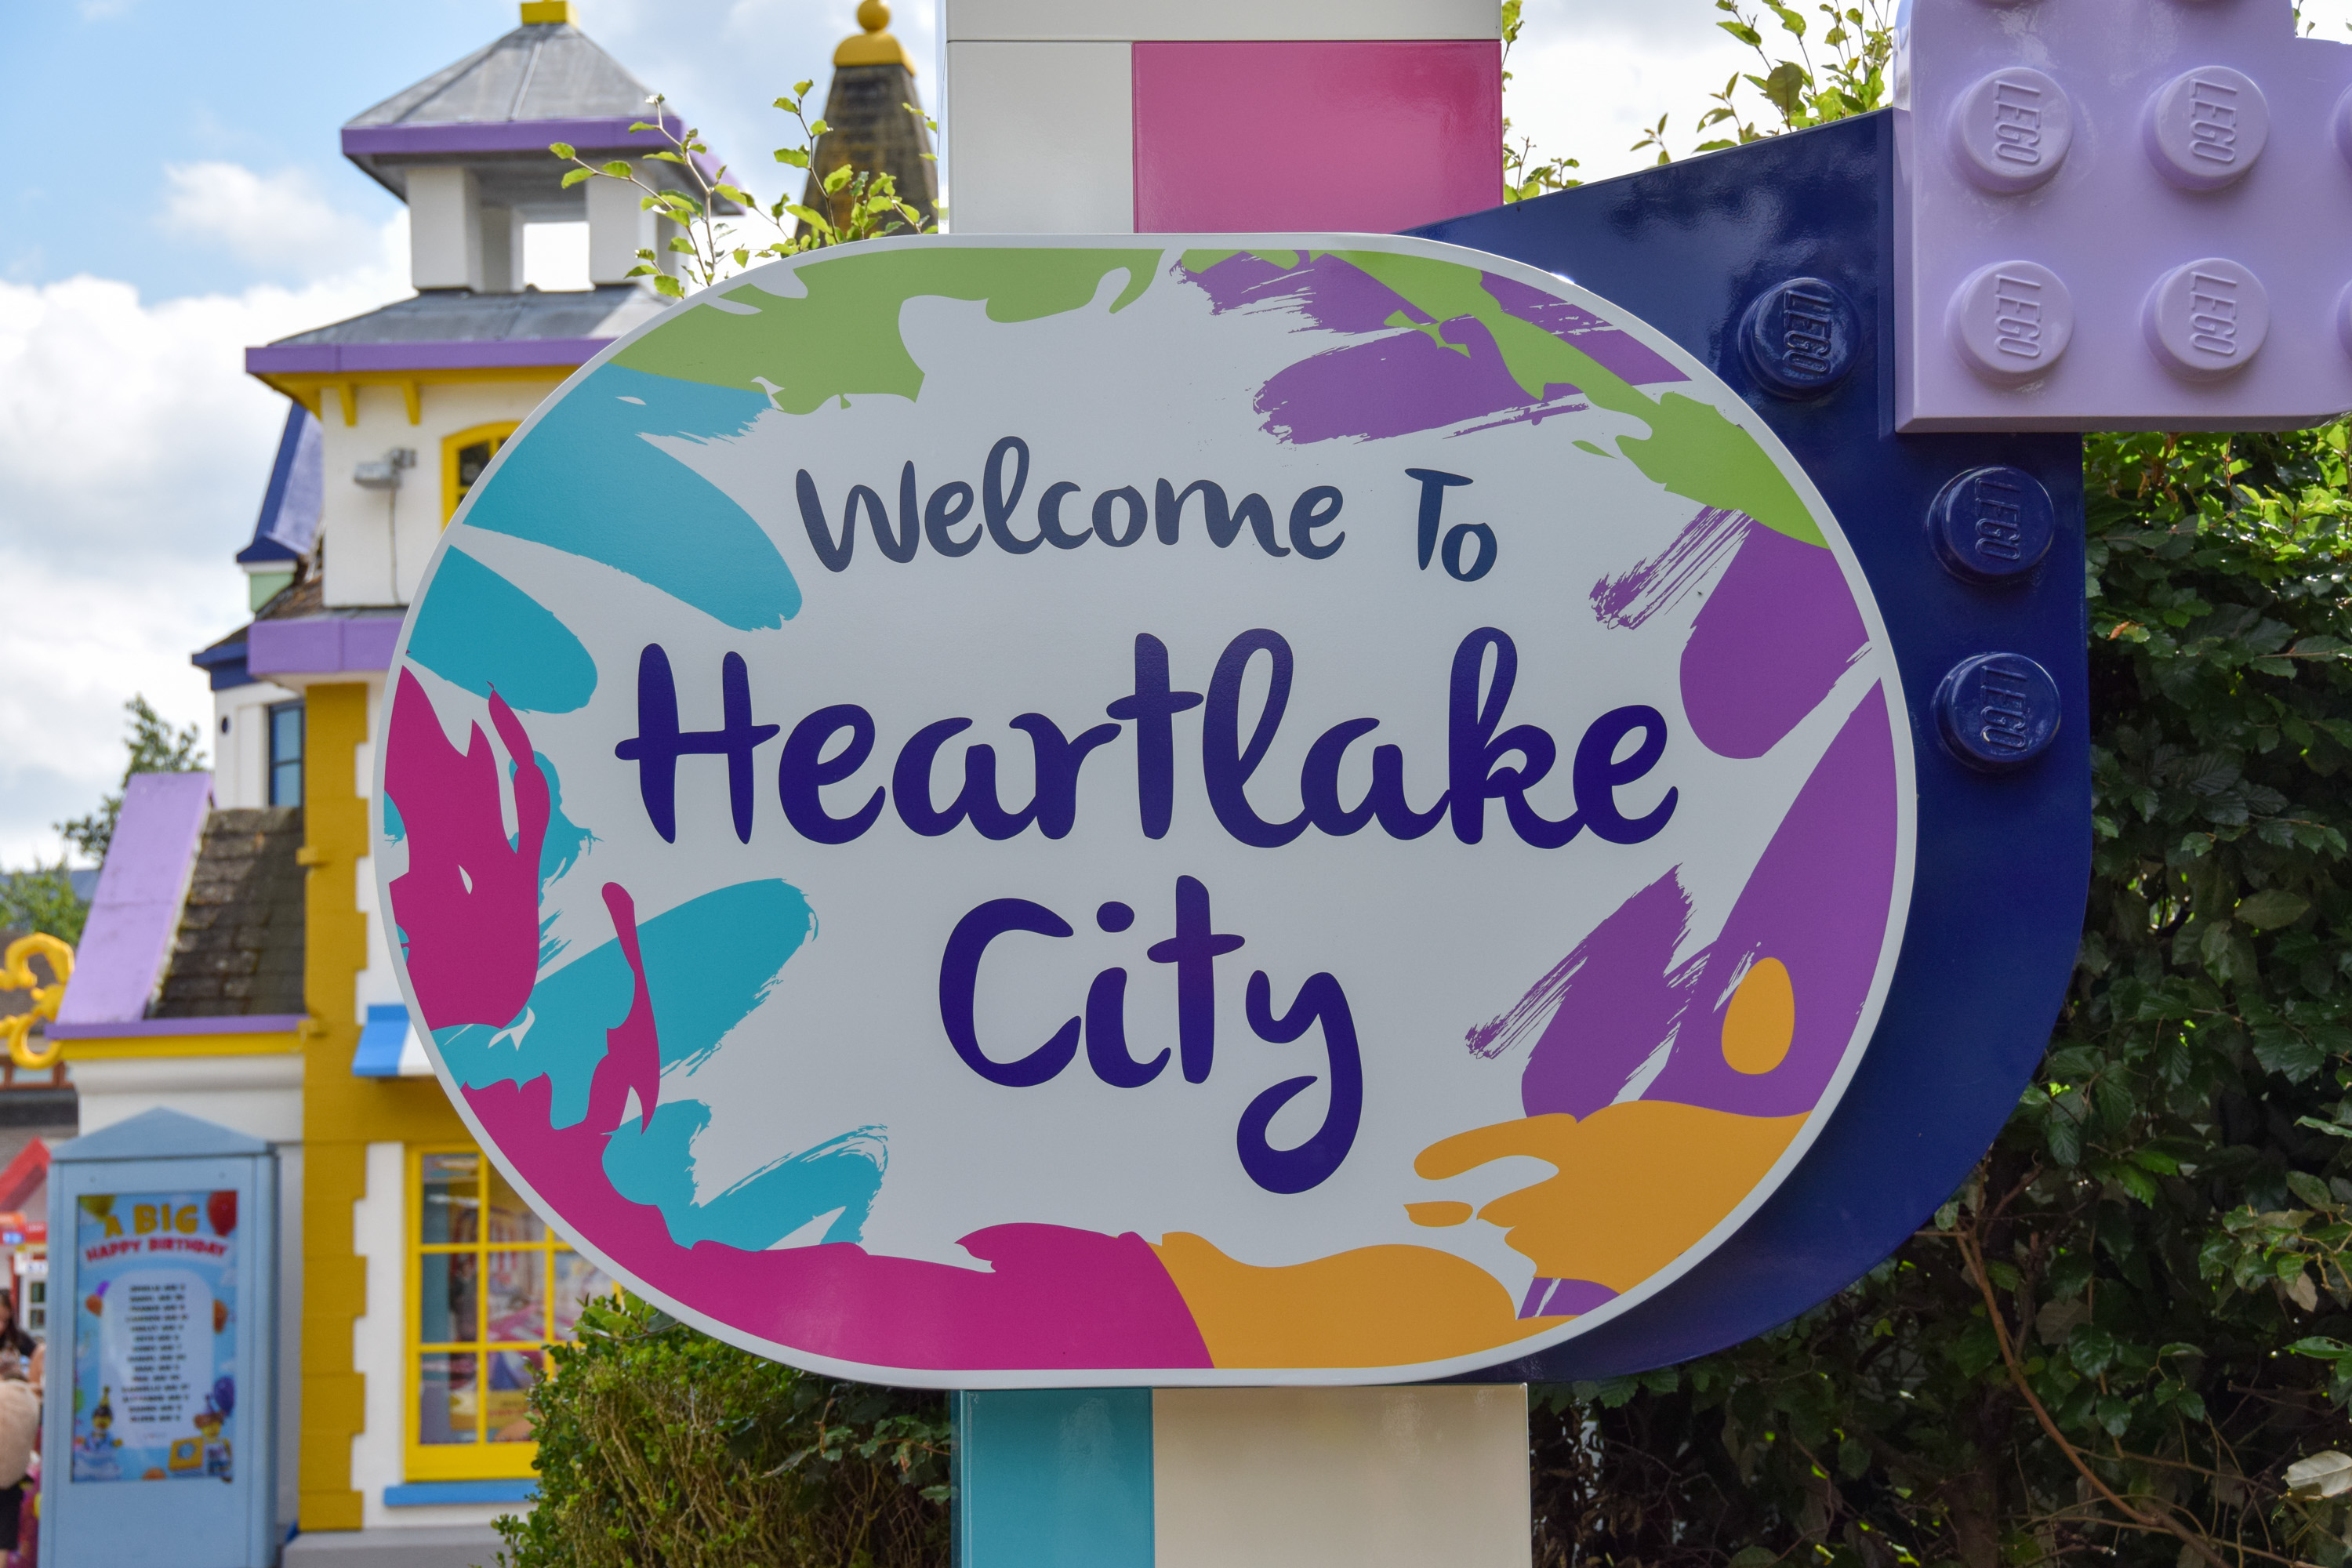 LEGOLAND Windsor Heartlake City Entrance Portals Changed